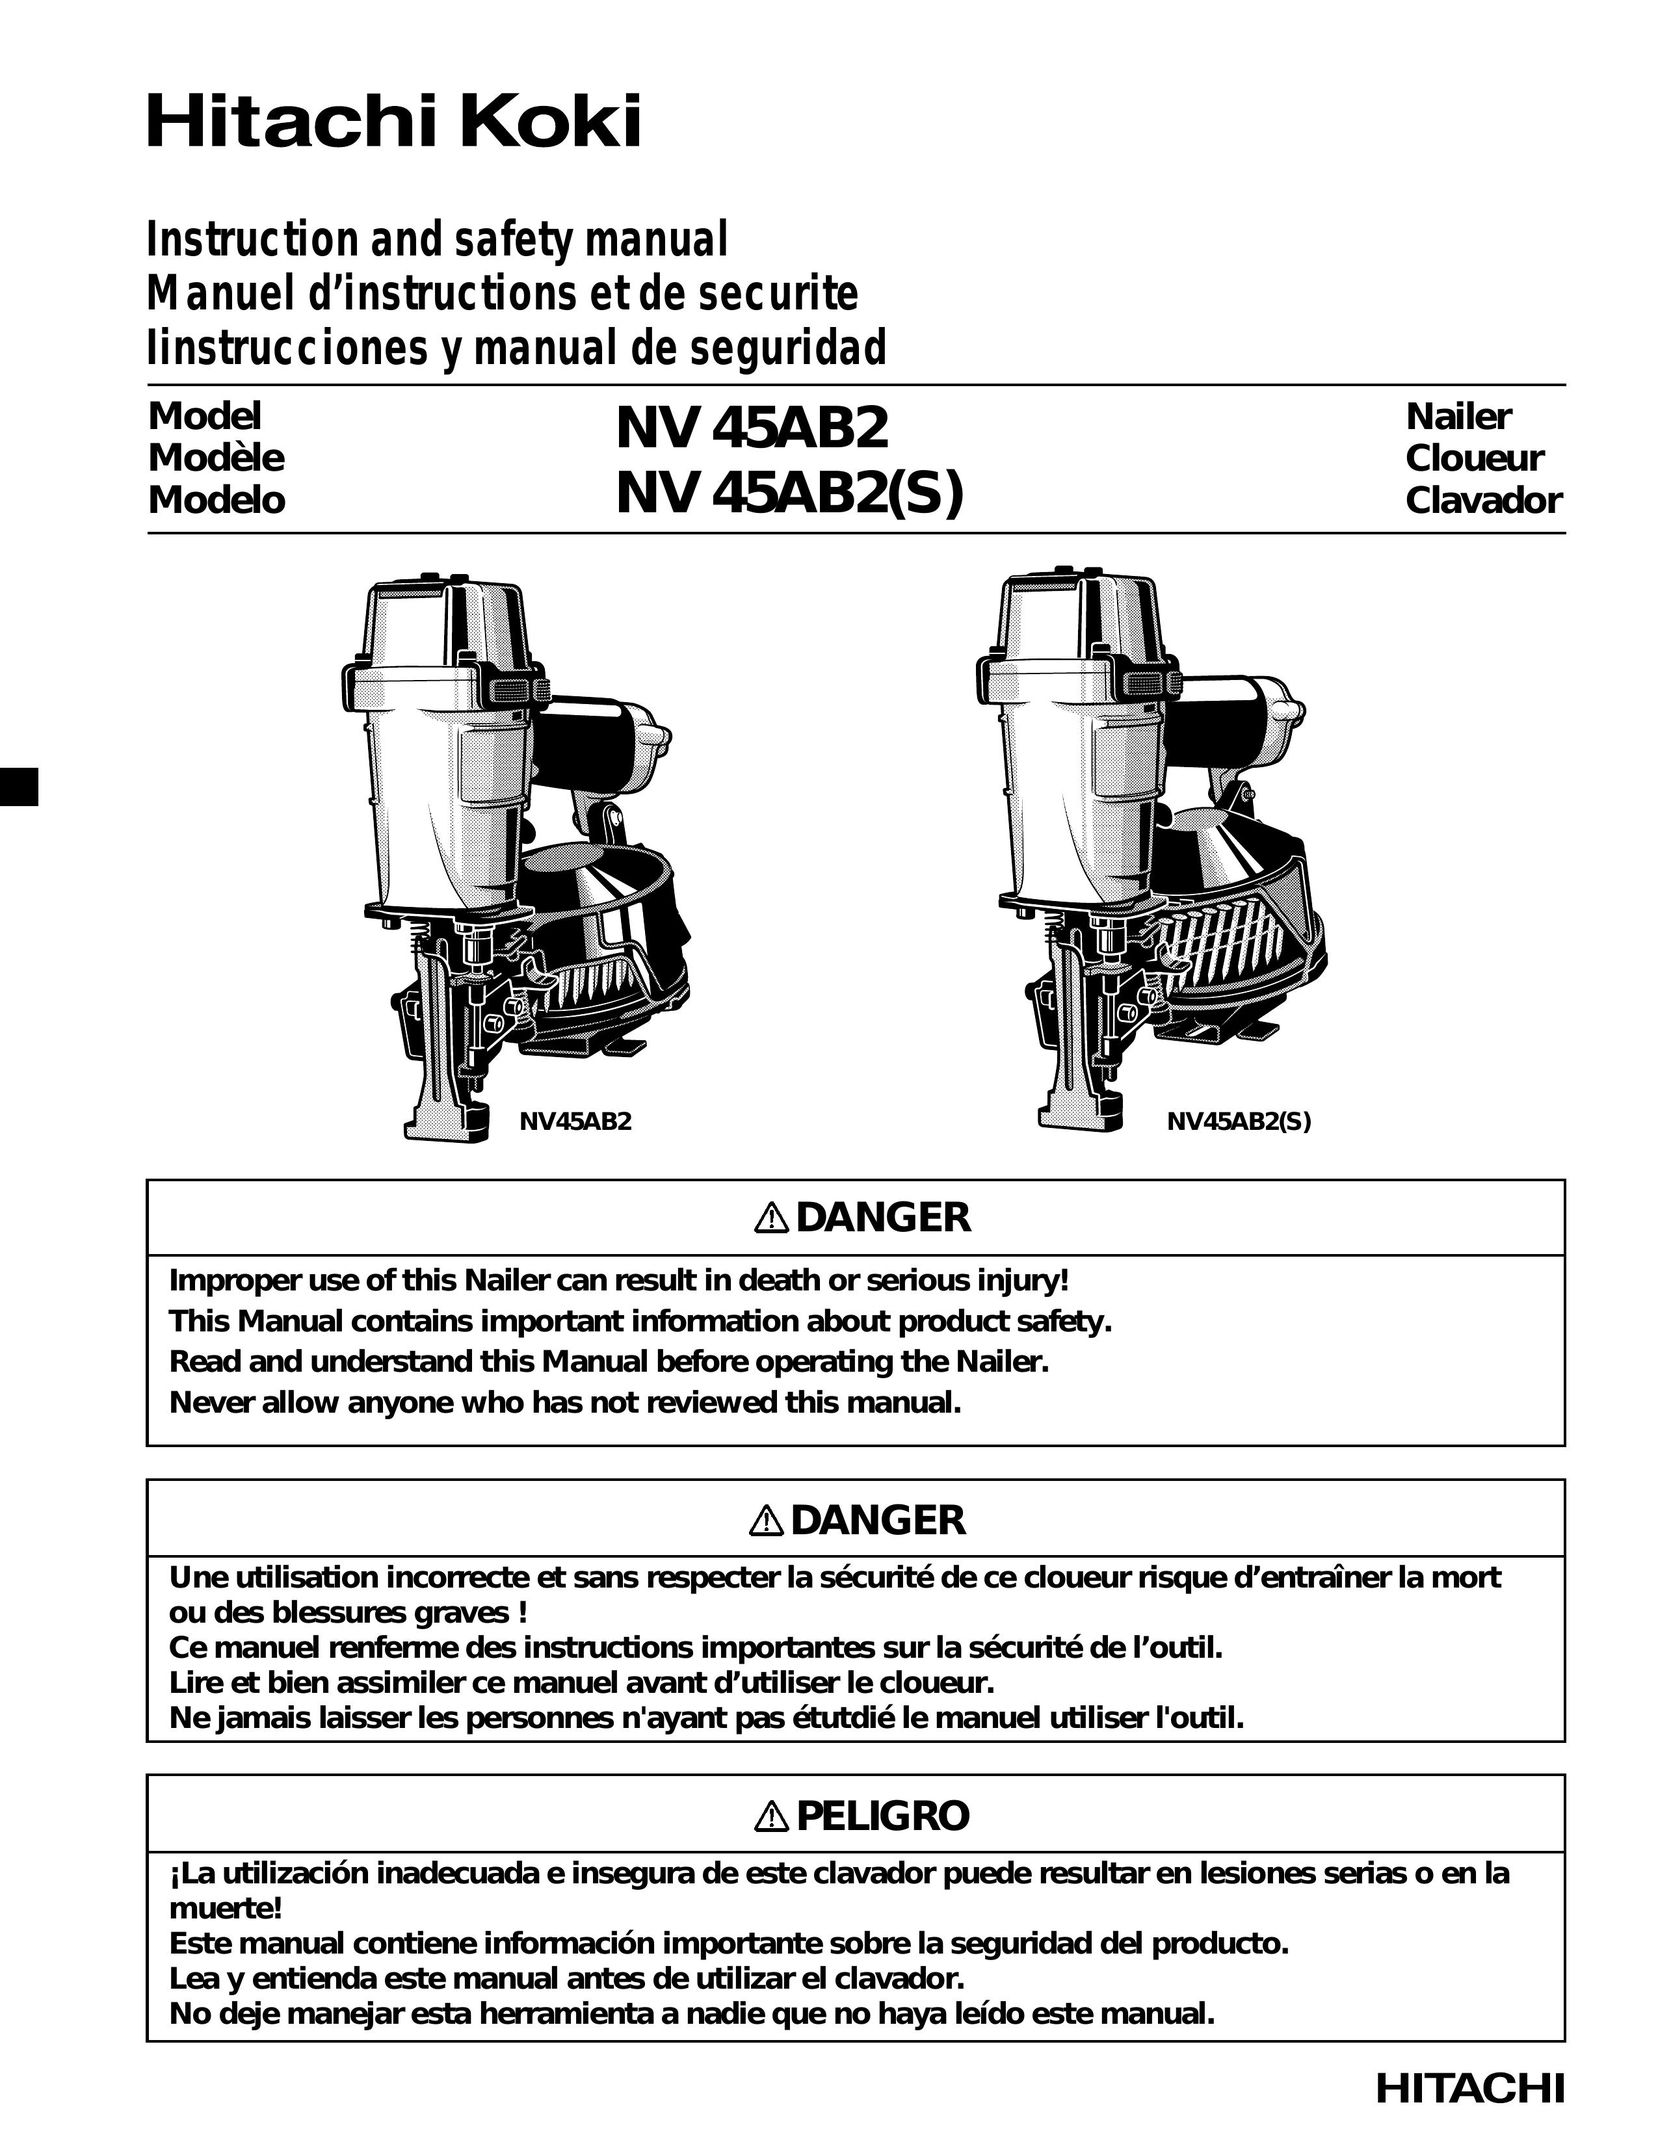 Hitachi Koki USA NV 45AB2(S) Nail Gun User Manual